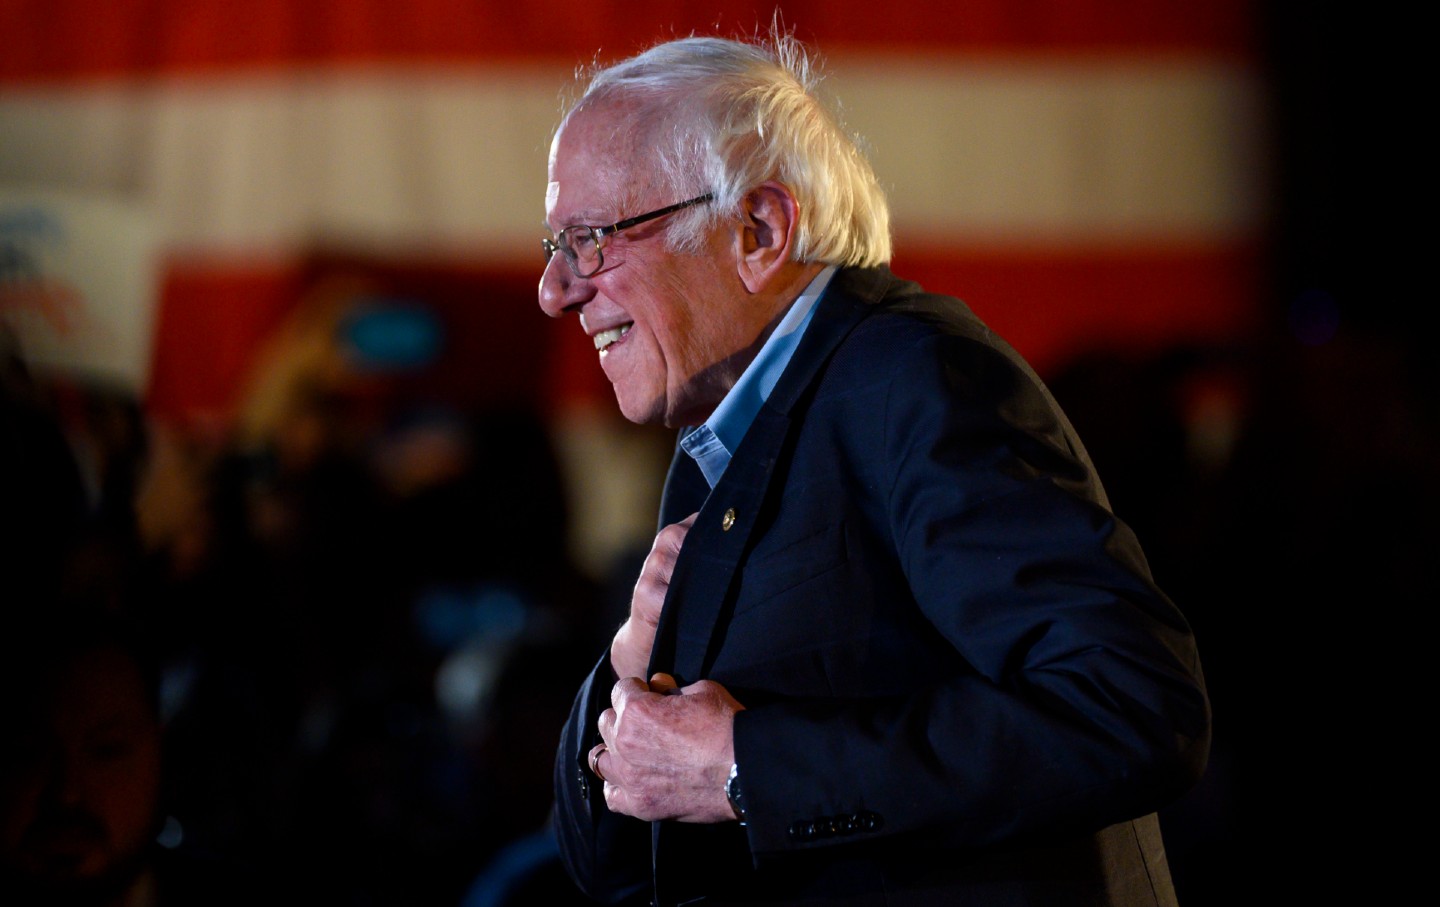 Senator Bernie Sanders smiling as he speaks at a campaign event